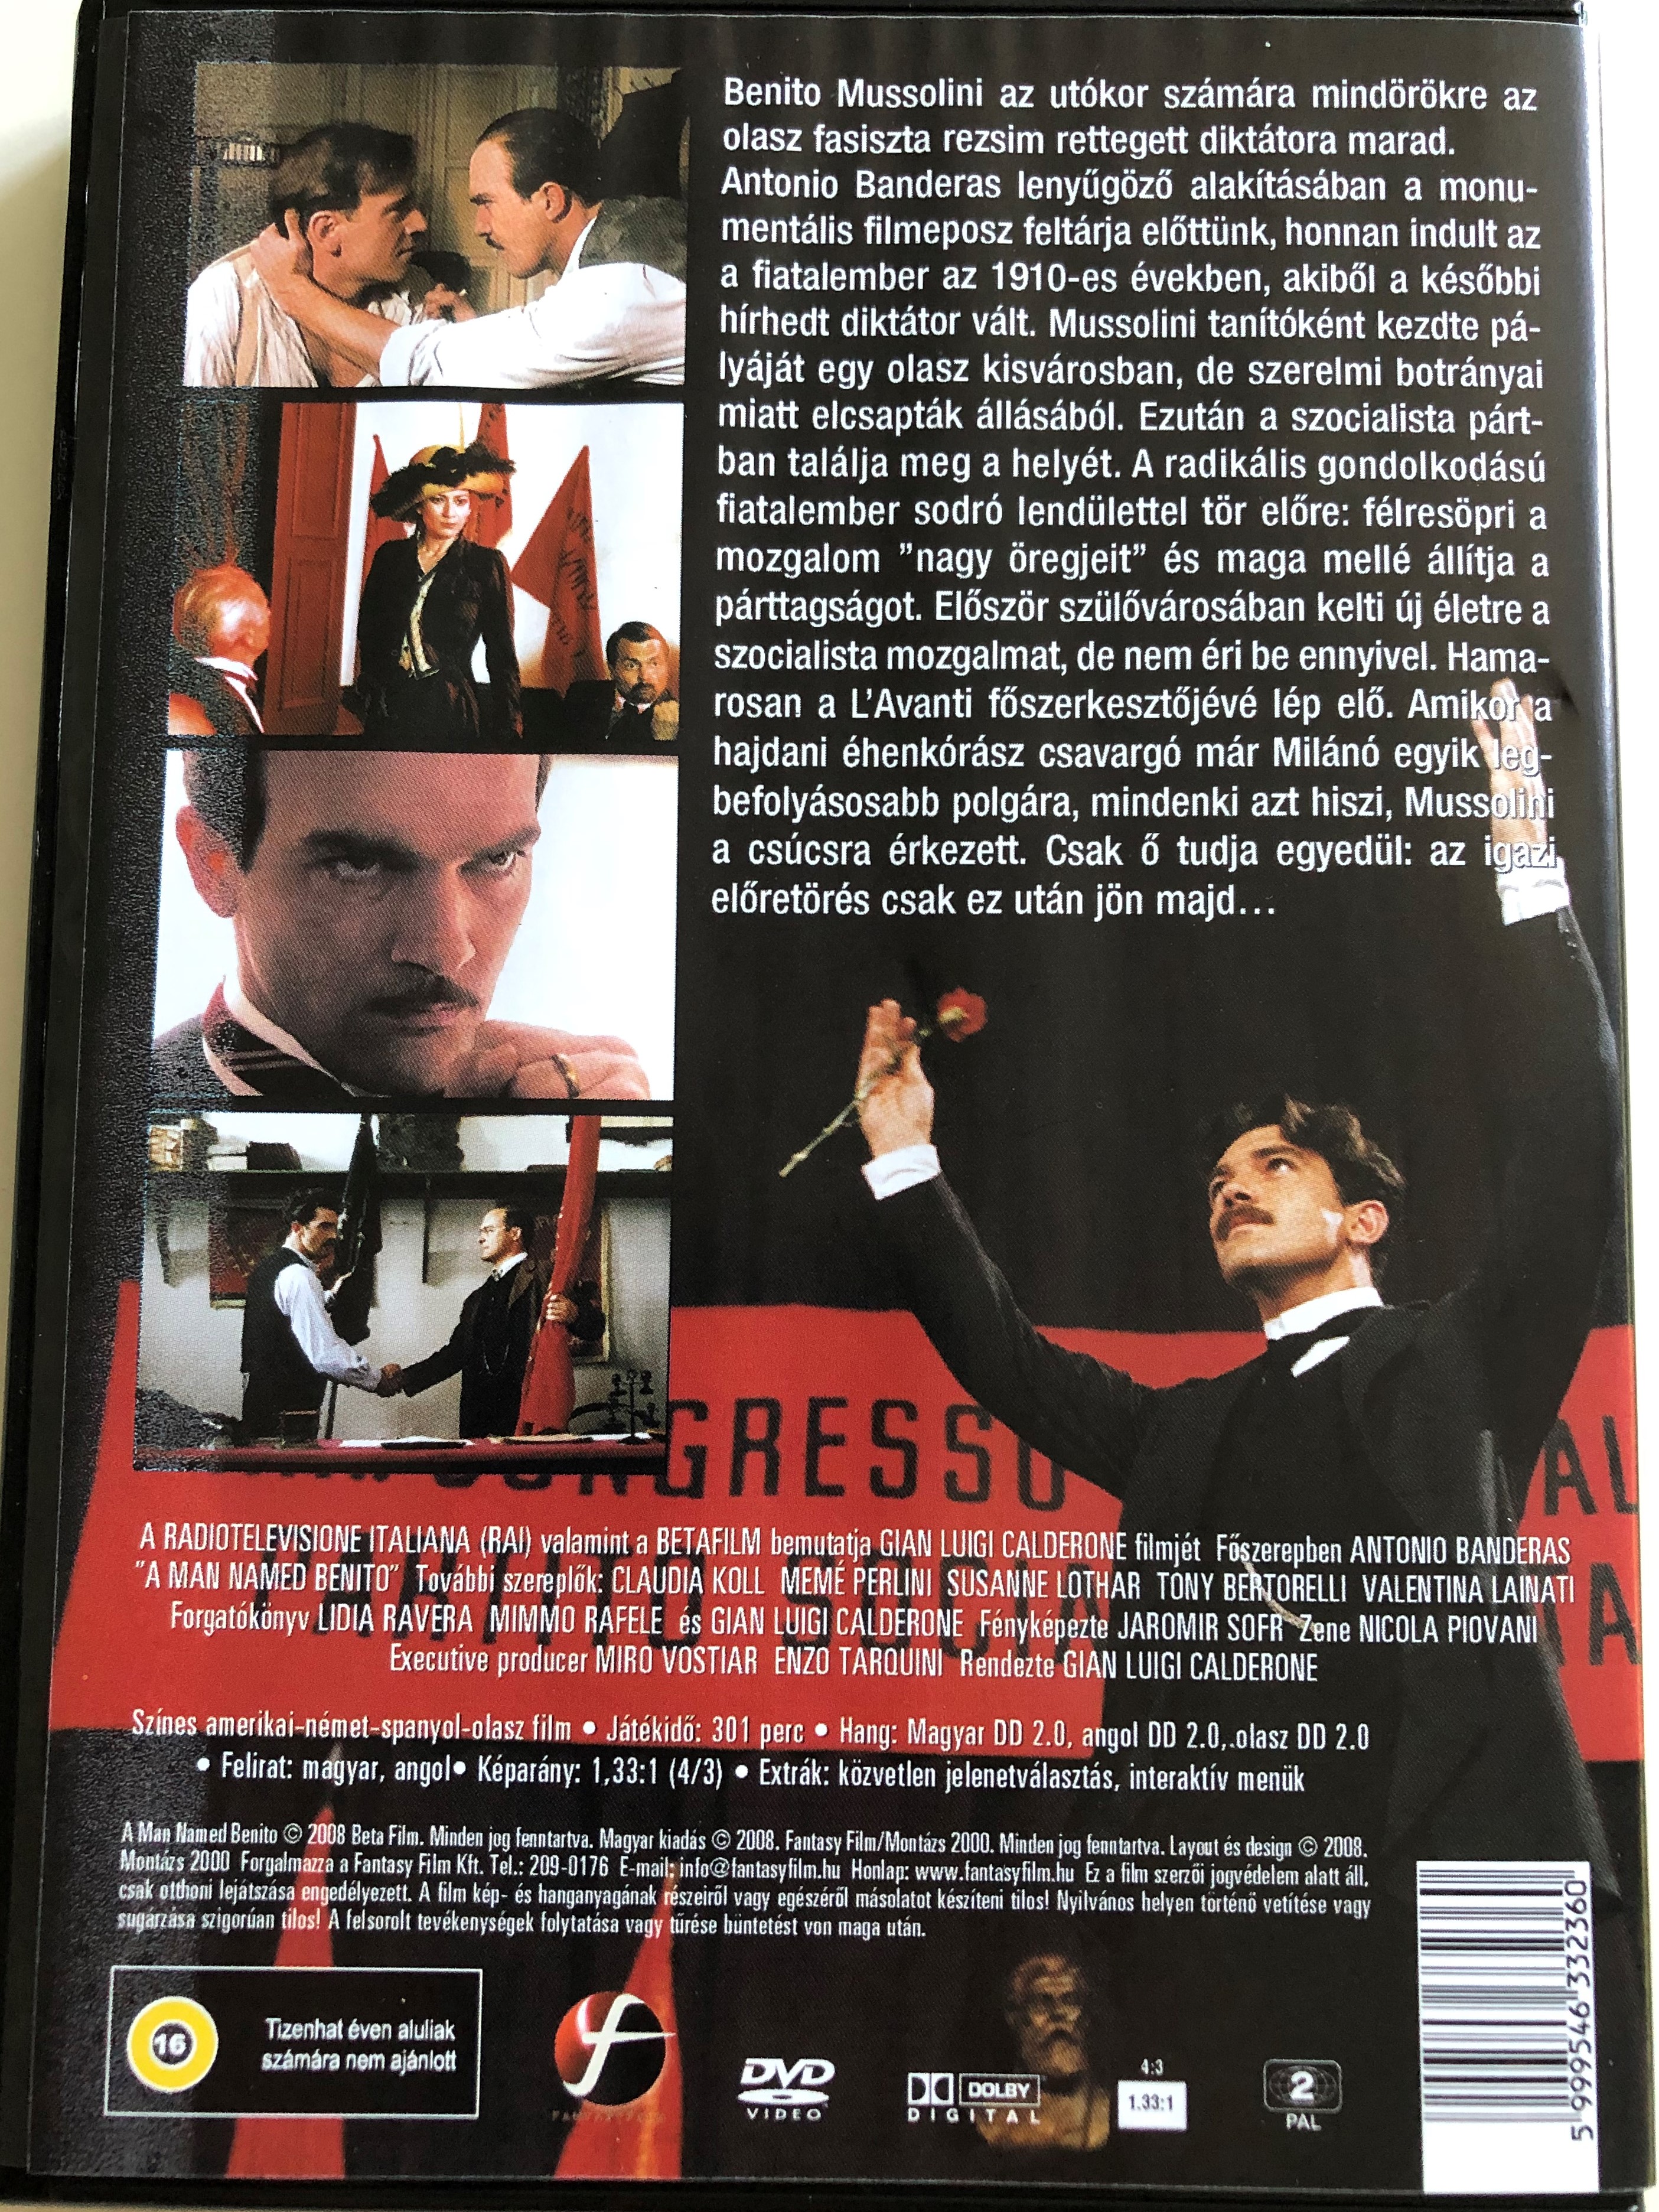 a-man-named-benito-dvd-1993-mussolini-t-a-hatalomig-2-disc-special-edition-directed-by-gianluigi-calderone-starring-antonio-banderas-claudia-koll-mem-perlini-susanne-lothar-3-.jpg